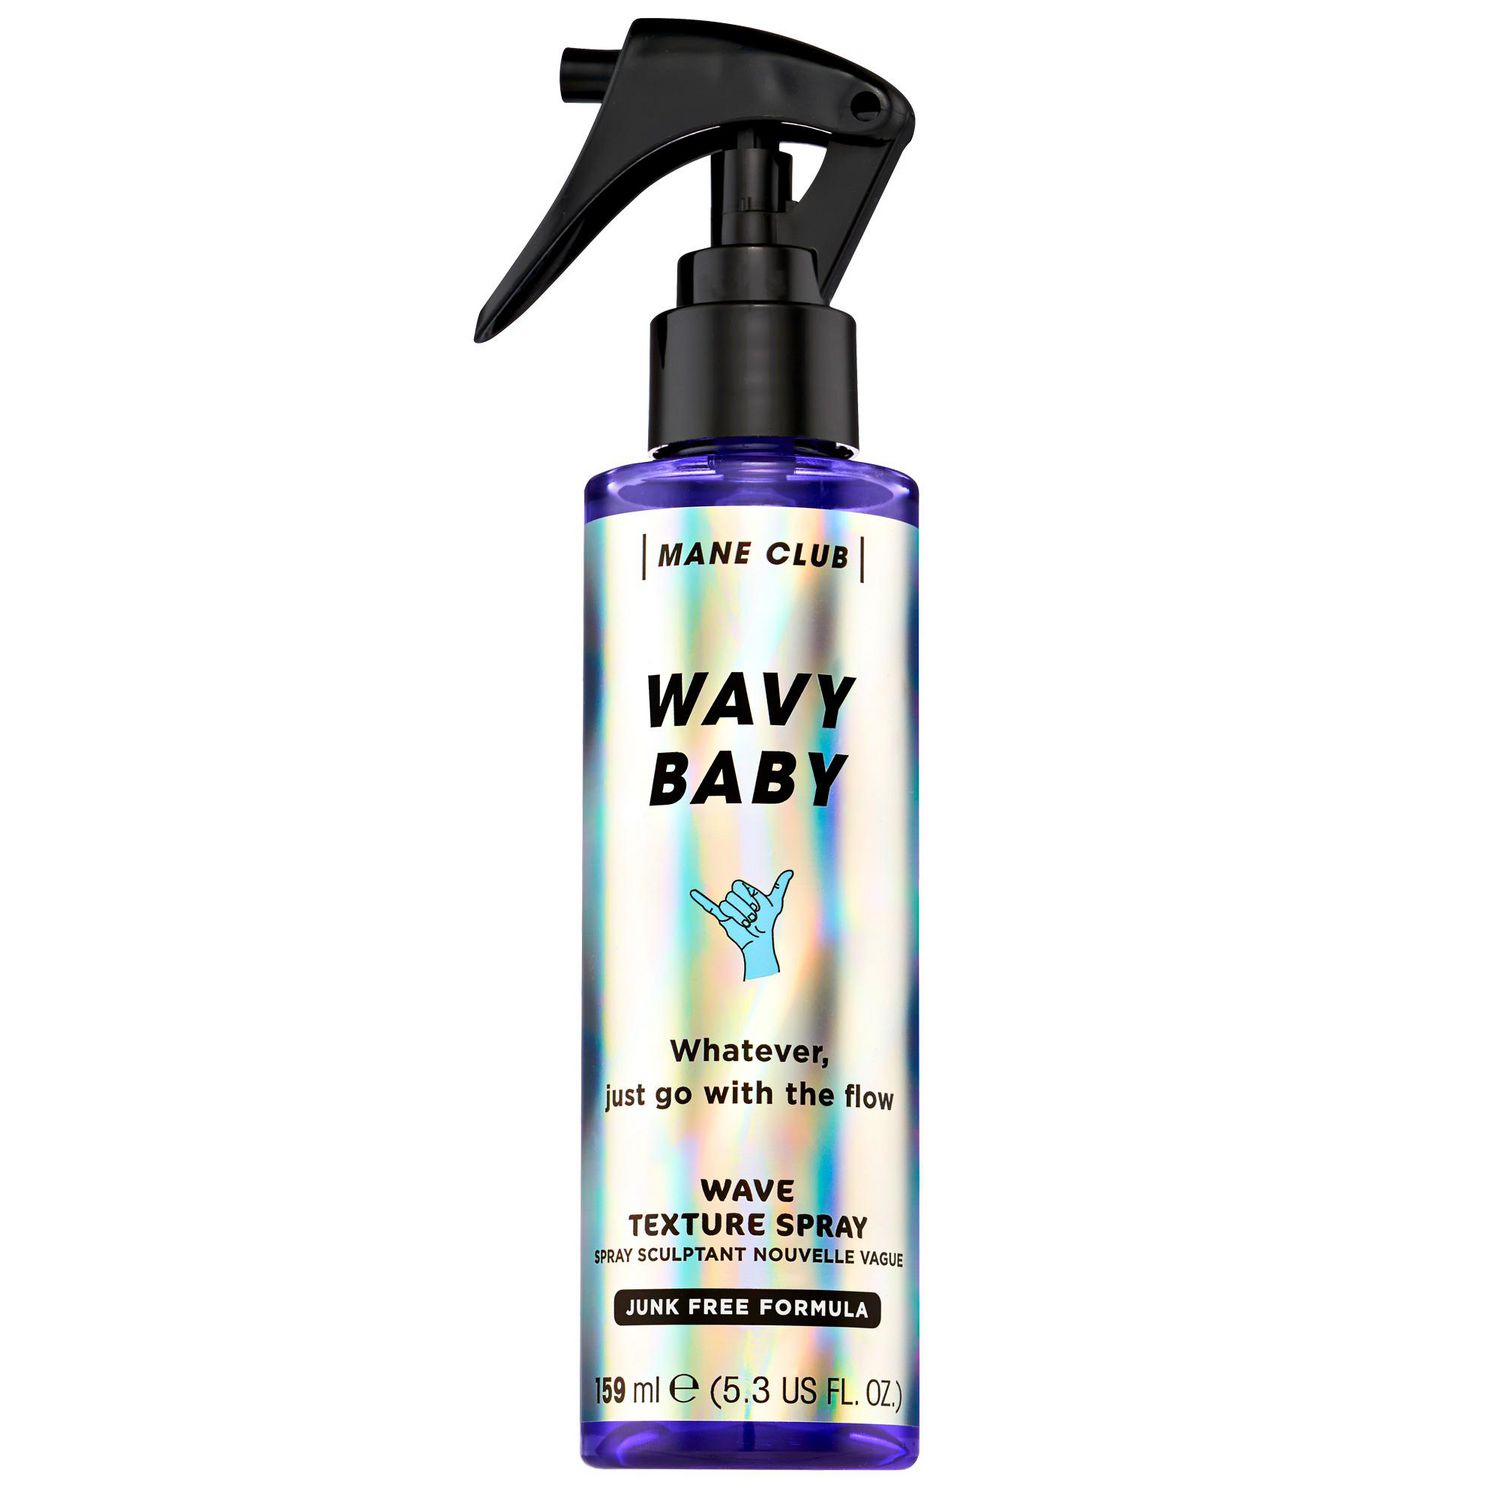 Mane Club WAVY BABYWave Texture Spray 